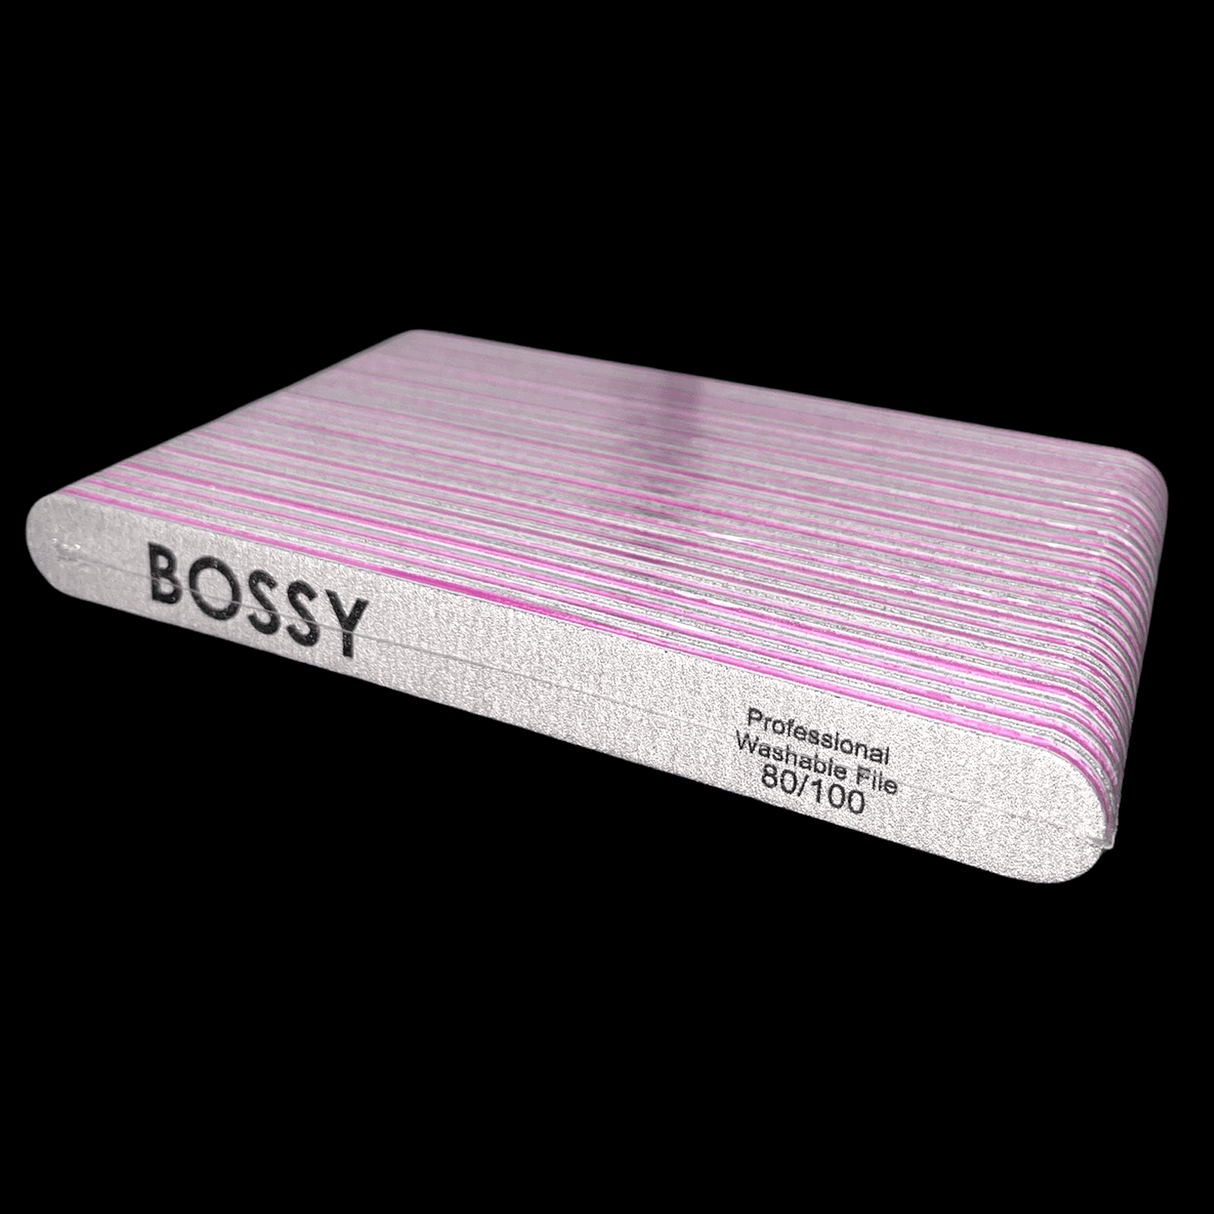 BOSSY Washable File Regular (Oval) ZEBRA (80/100)